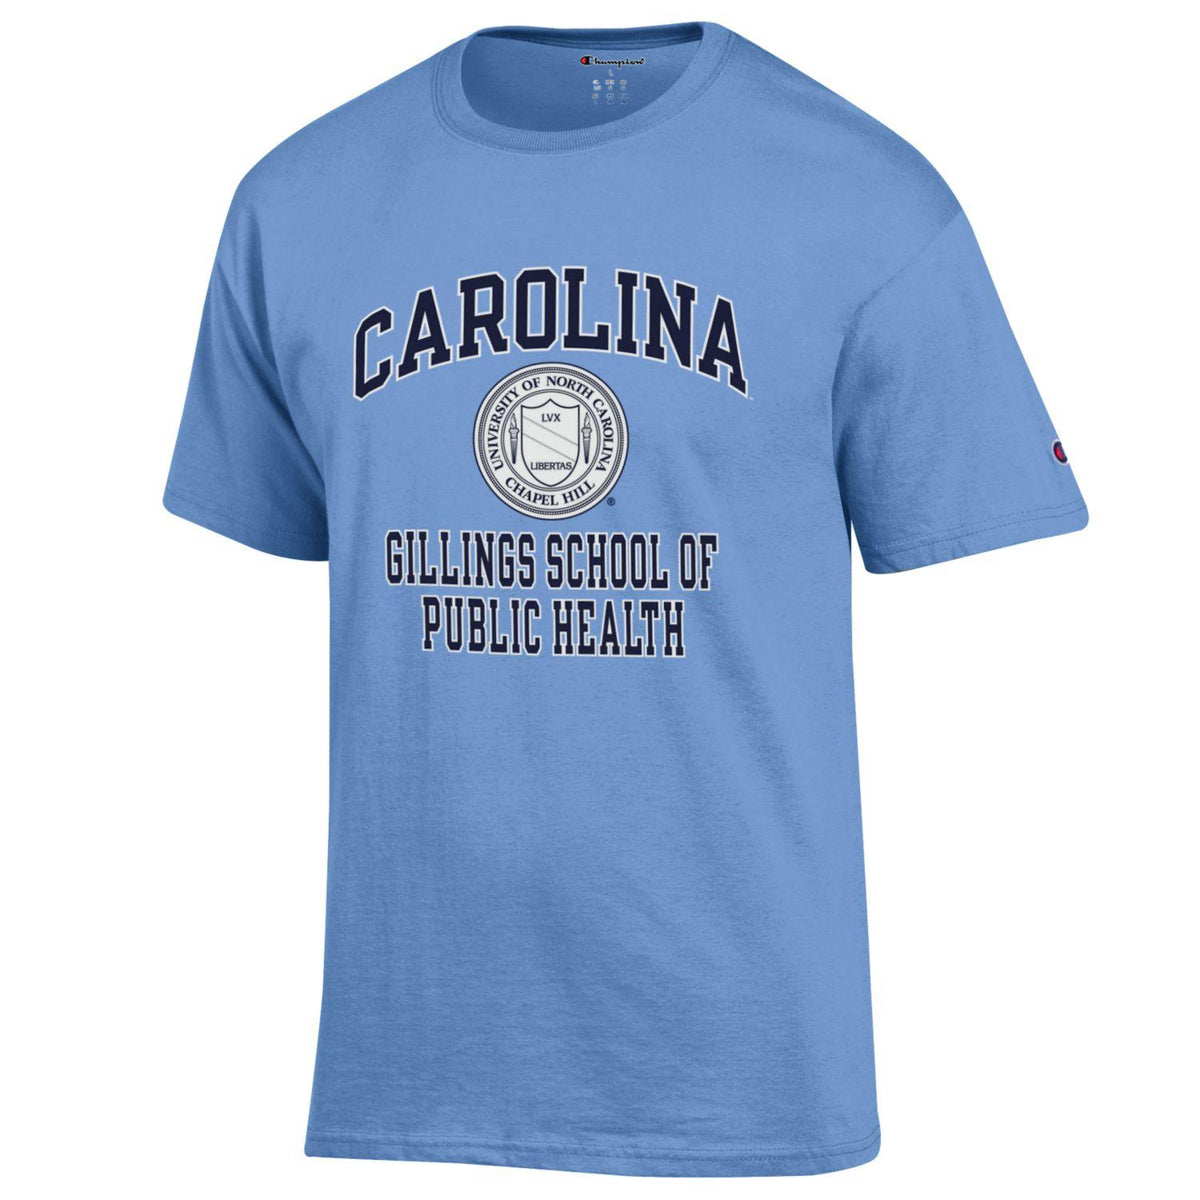 Champion - Carolina Gillings School of Public Health T-Shirt